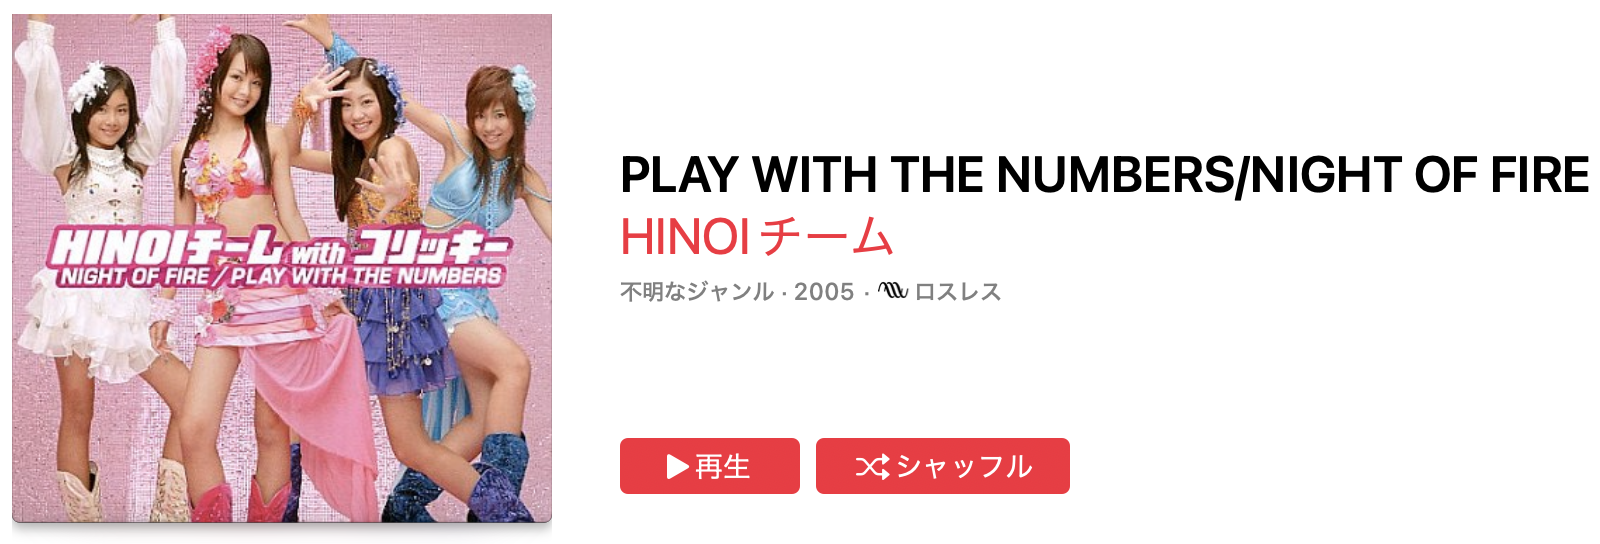 HINOI チーム - NIGHT OF FIRE